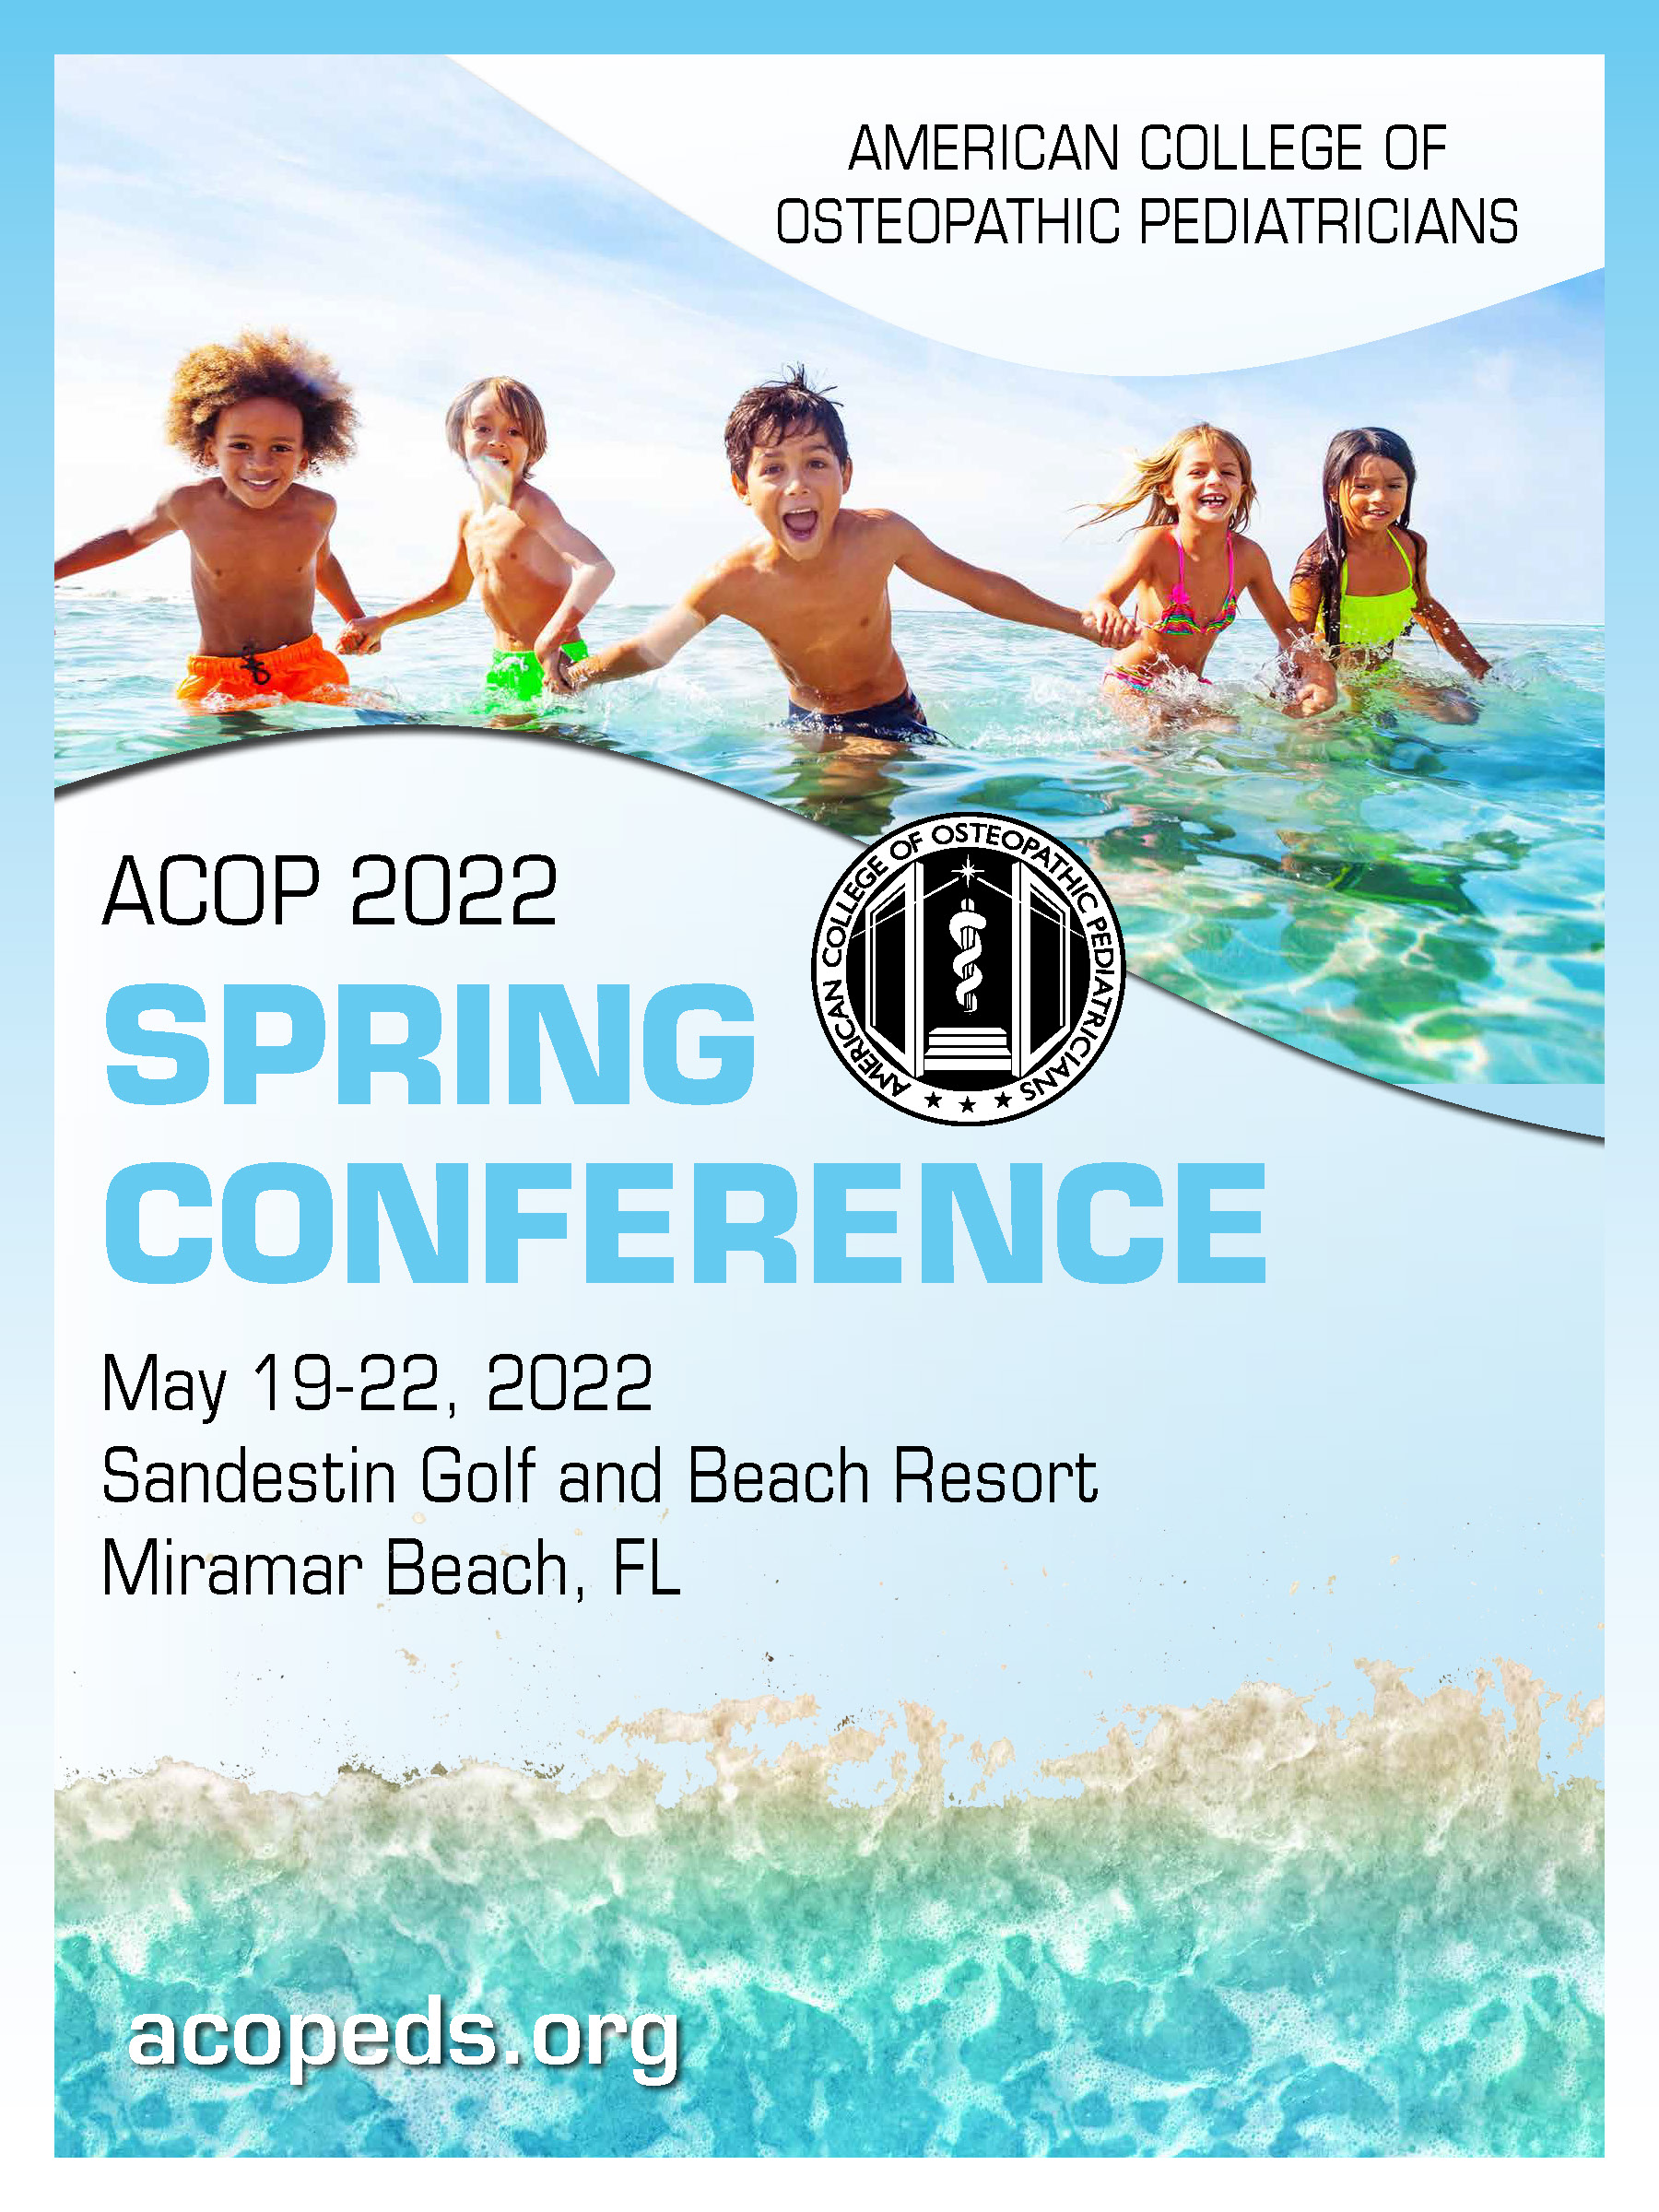 ACOP Conferences